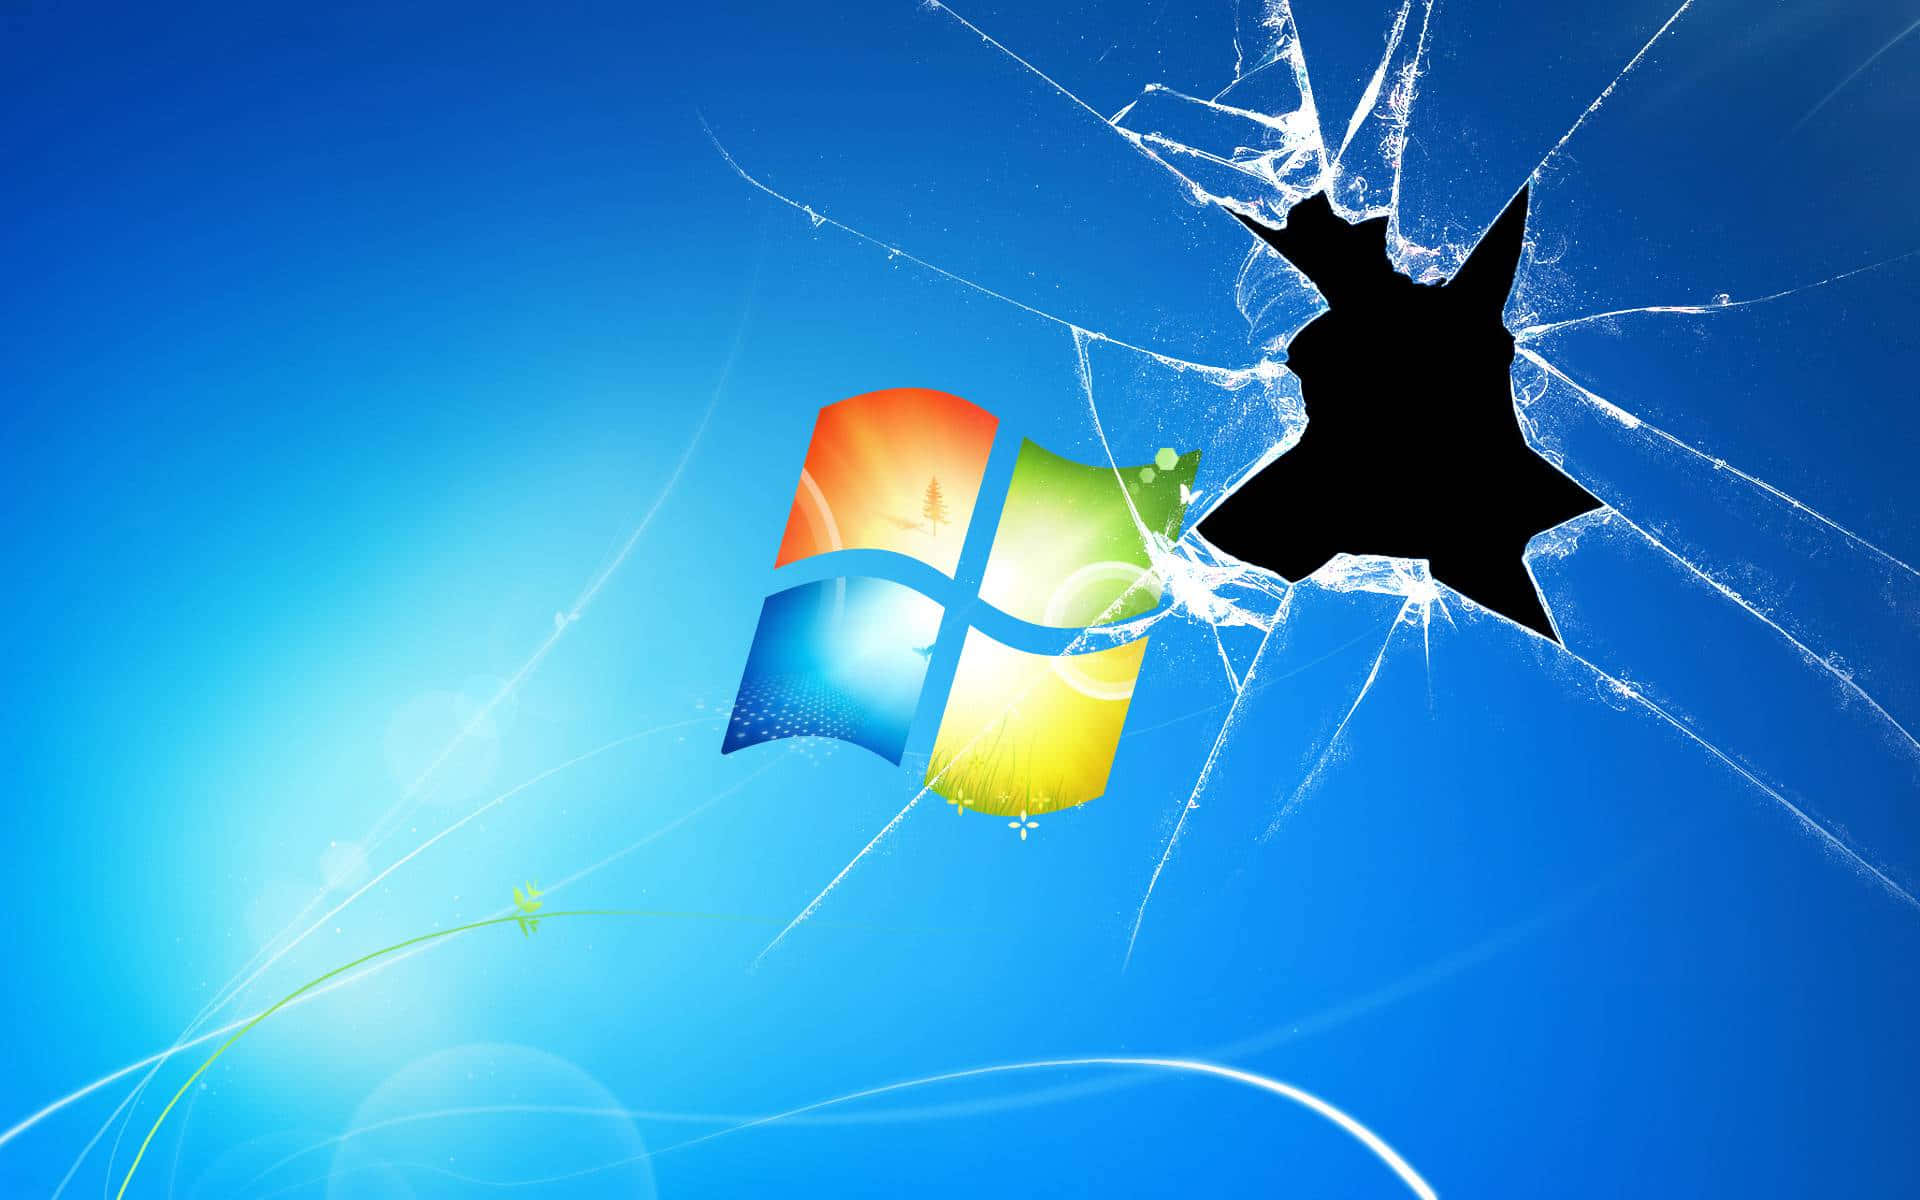 Windows7 Bakgrundsbilder I Hd